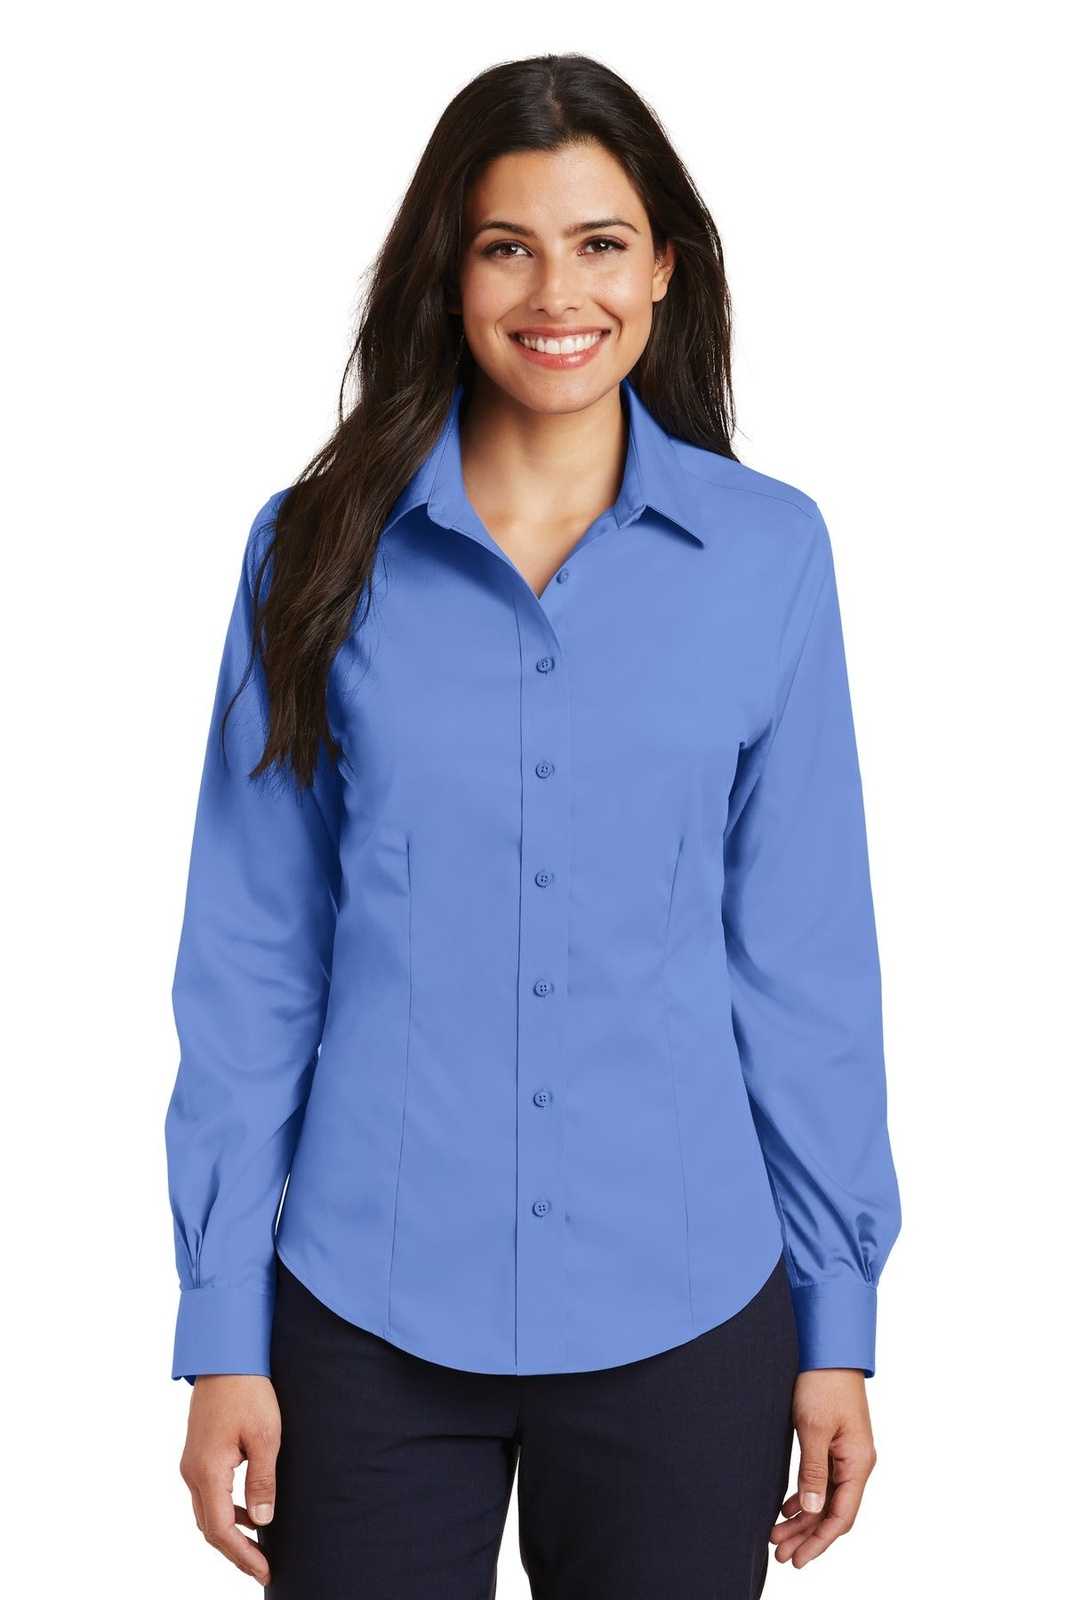 Port Authority L638 Ladies Non-Iron Twill Shirt - Ultramarine Blue - HIT a Double - 1